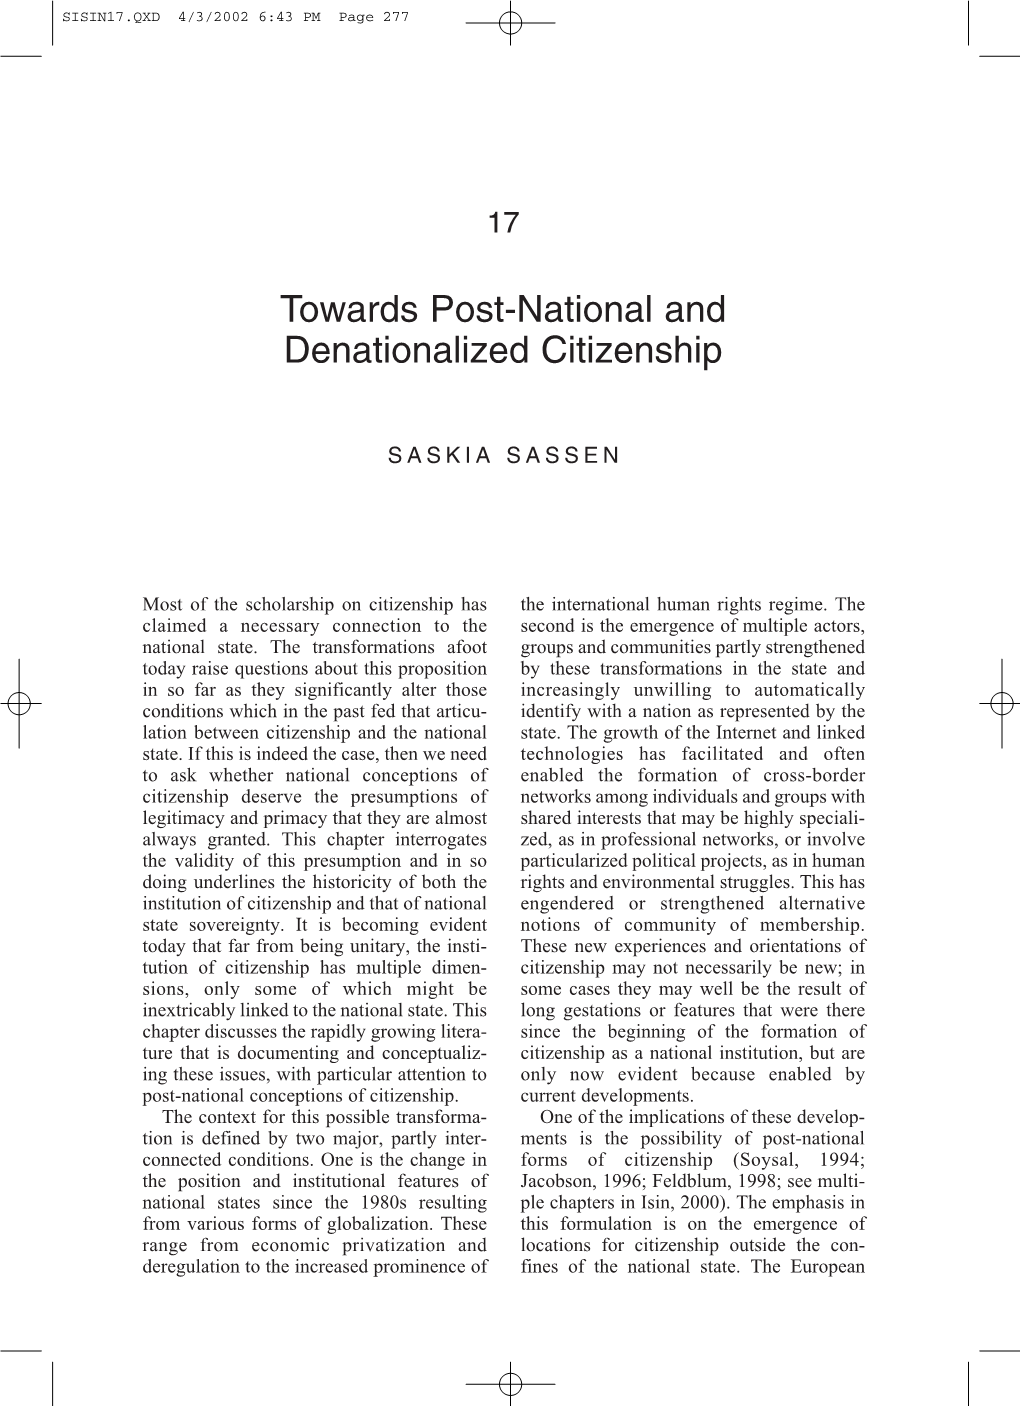 Towards Post-National and Denationalized Citizenship